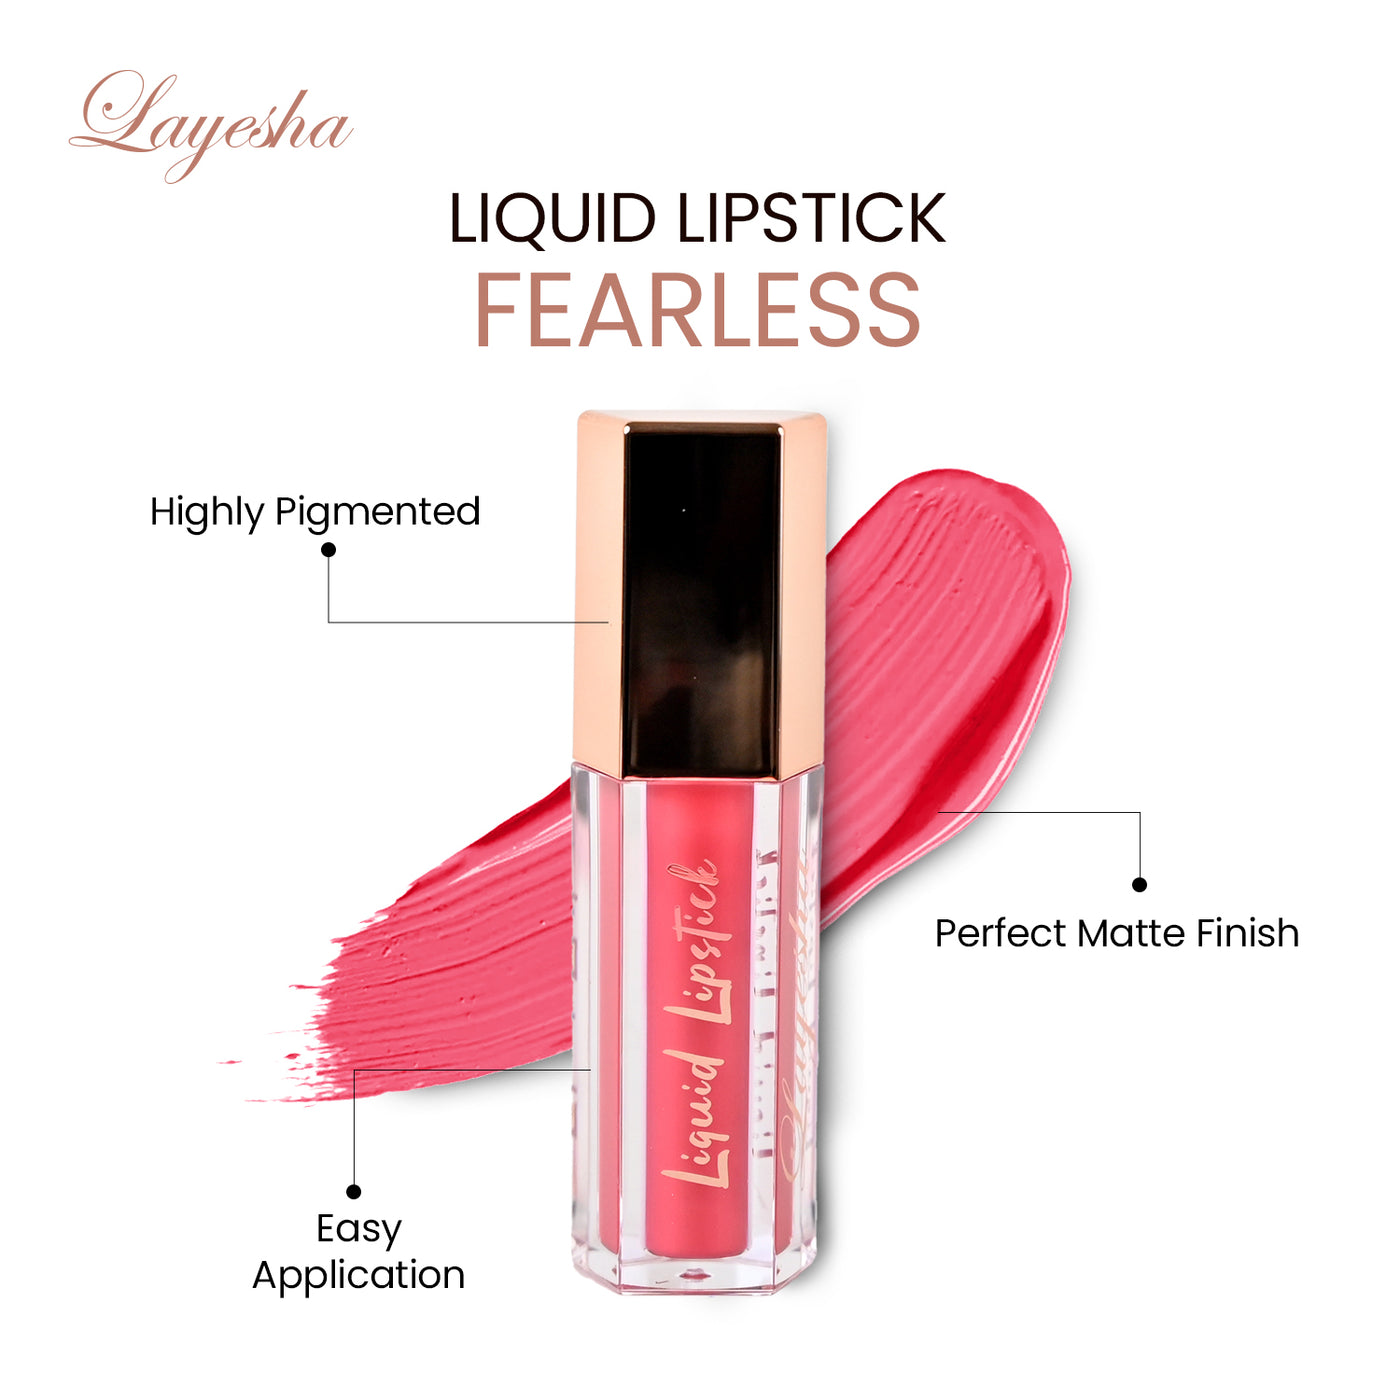 Layesha Fearless Liquid Lipstick